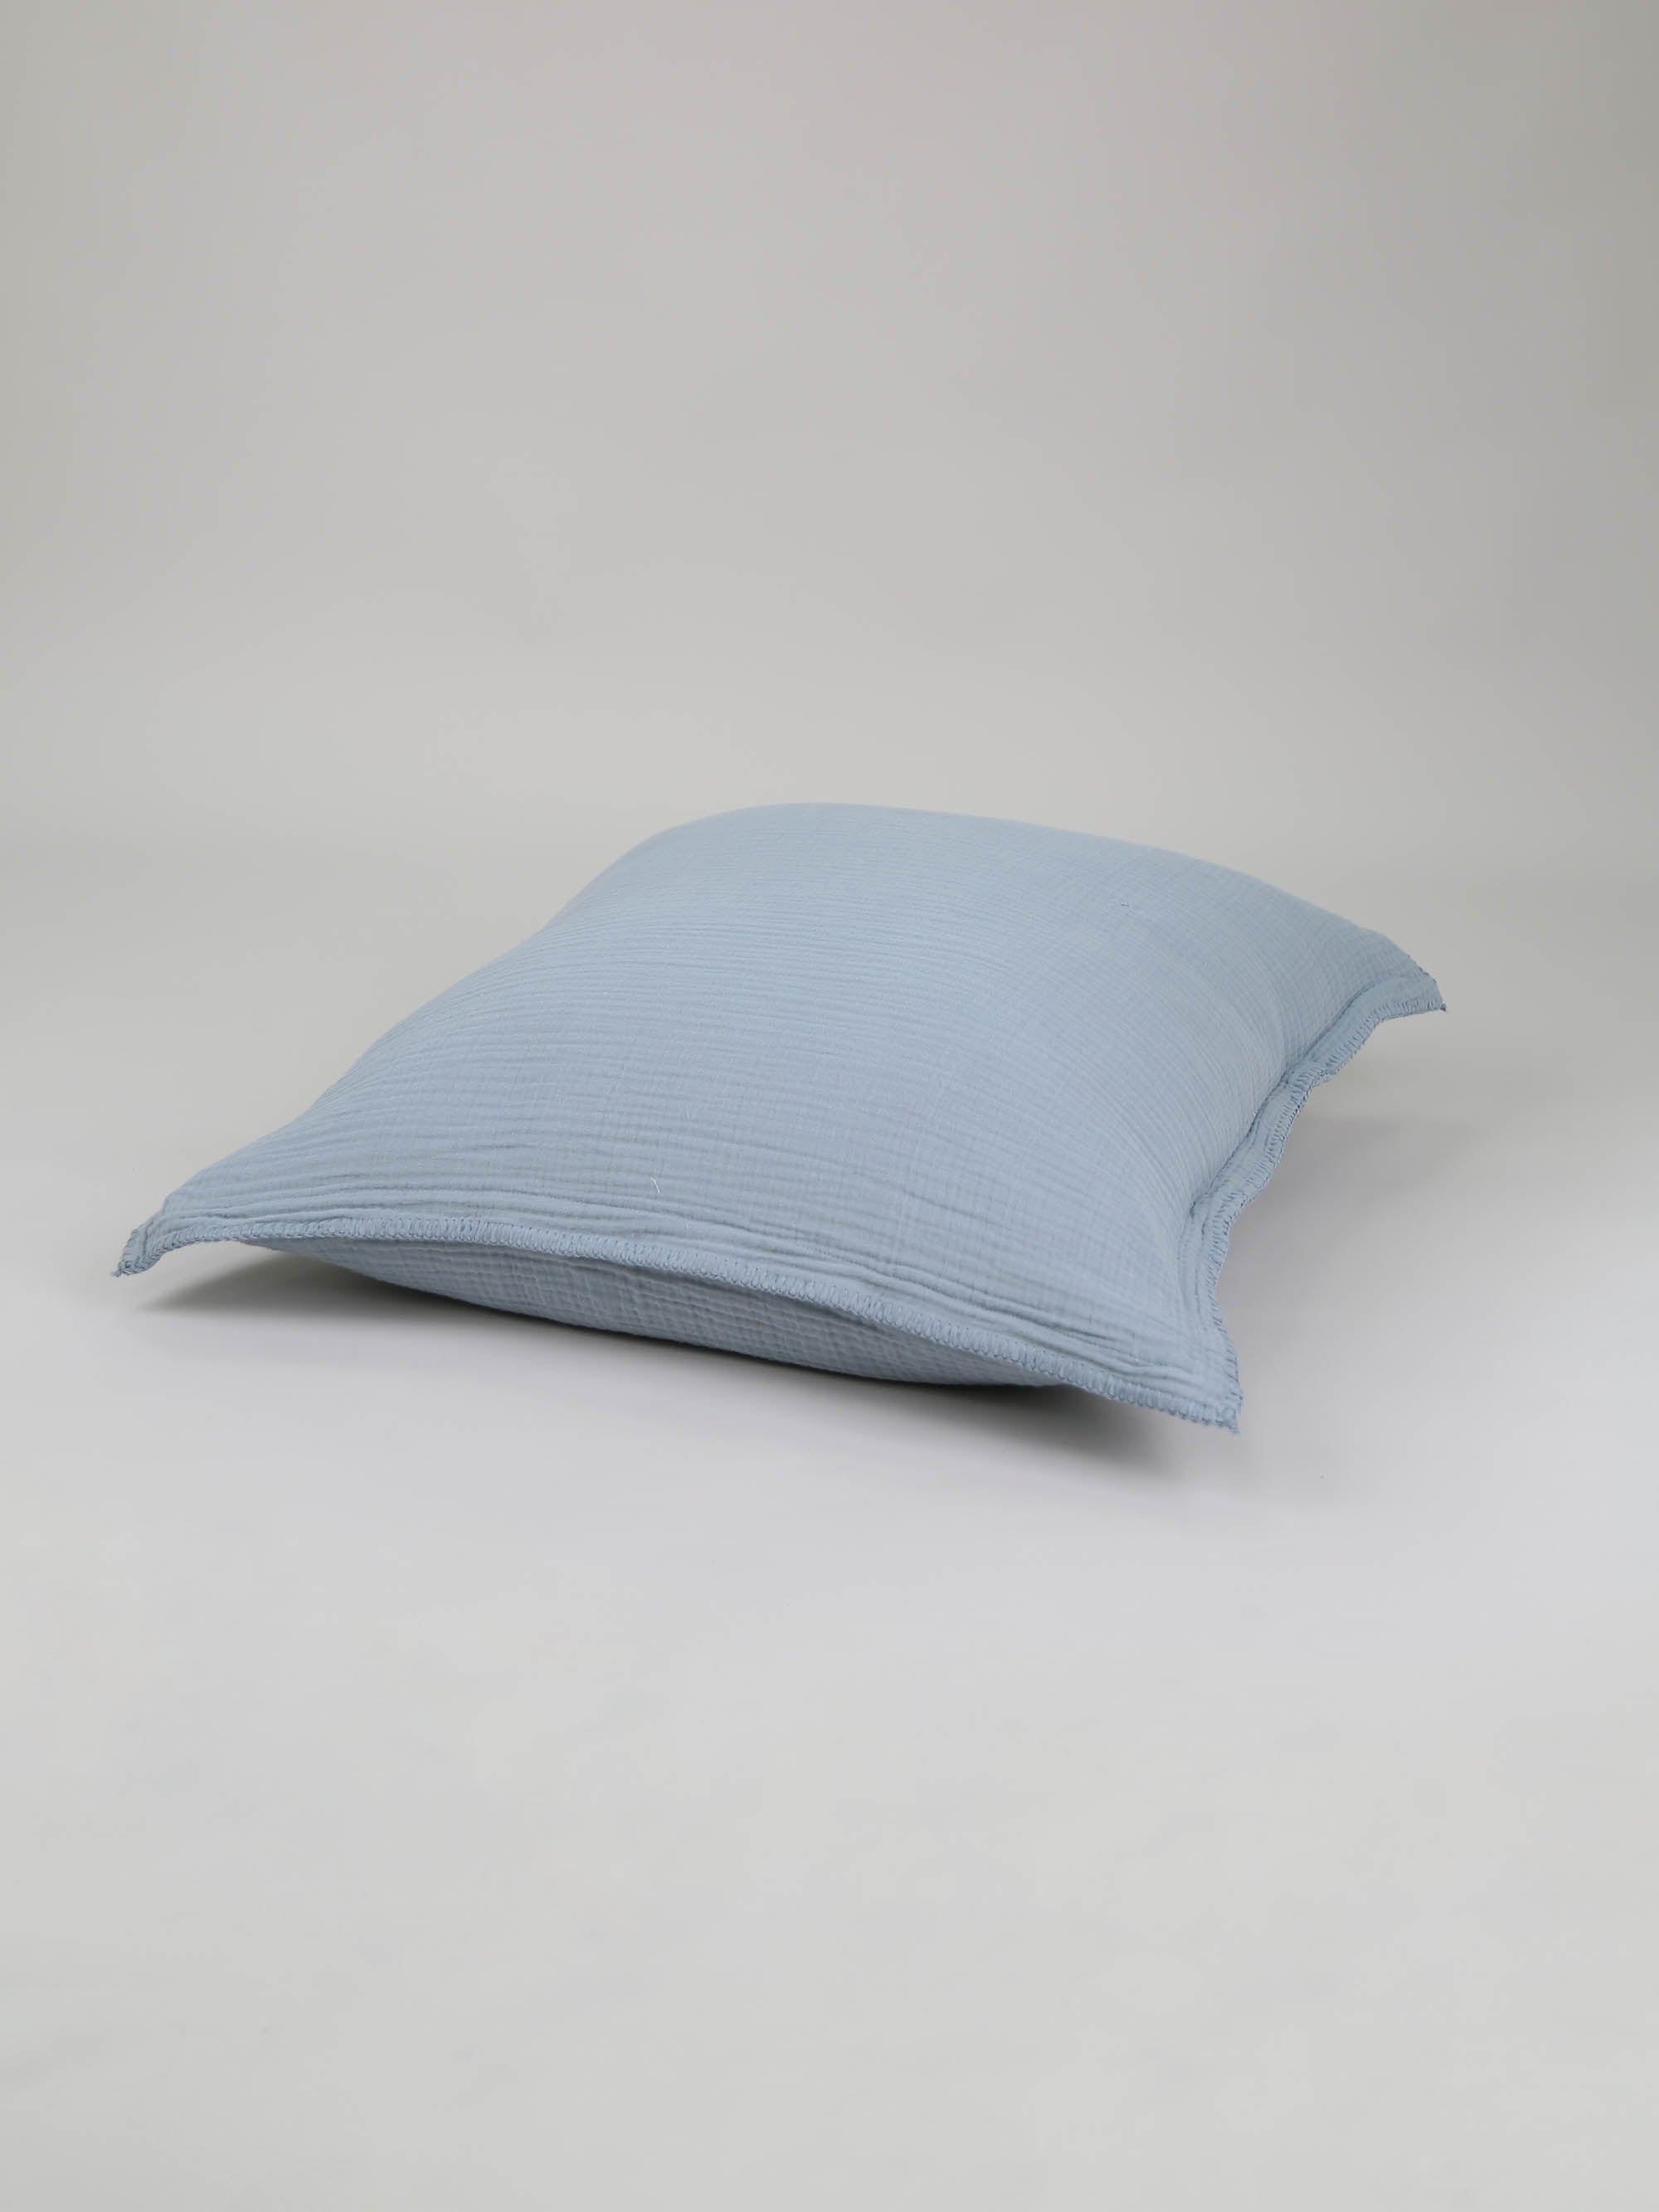 Dream Collection | 4 Layer Muslin | Square Pillowcase